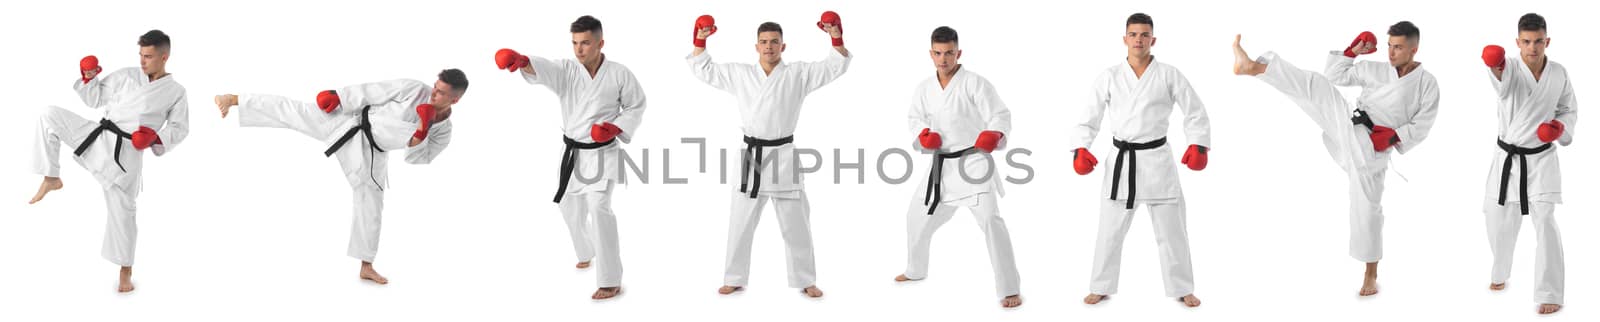 Taekwondo, judo, karate athlete by ALotOfPeople